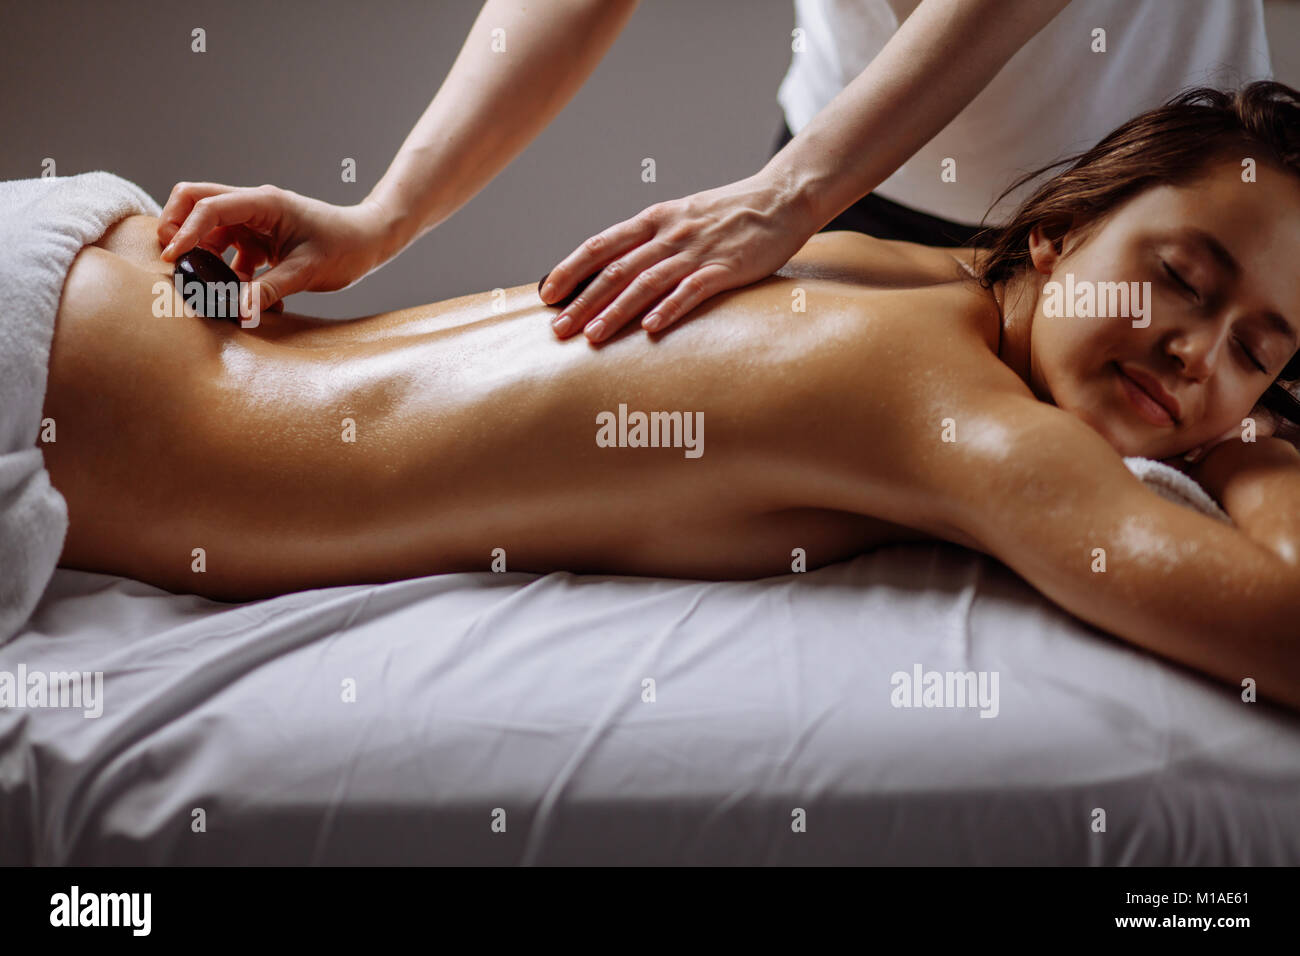 woman getting hot stone massage in spa salon. Beauty treatment concept  Stock Photo - Alamy